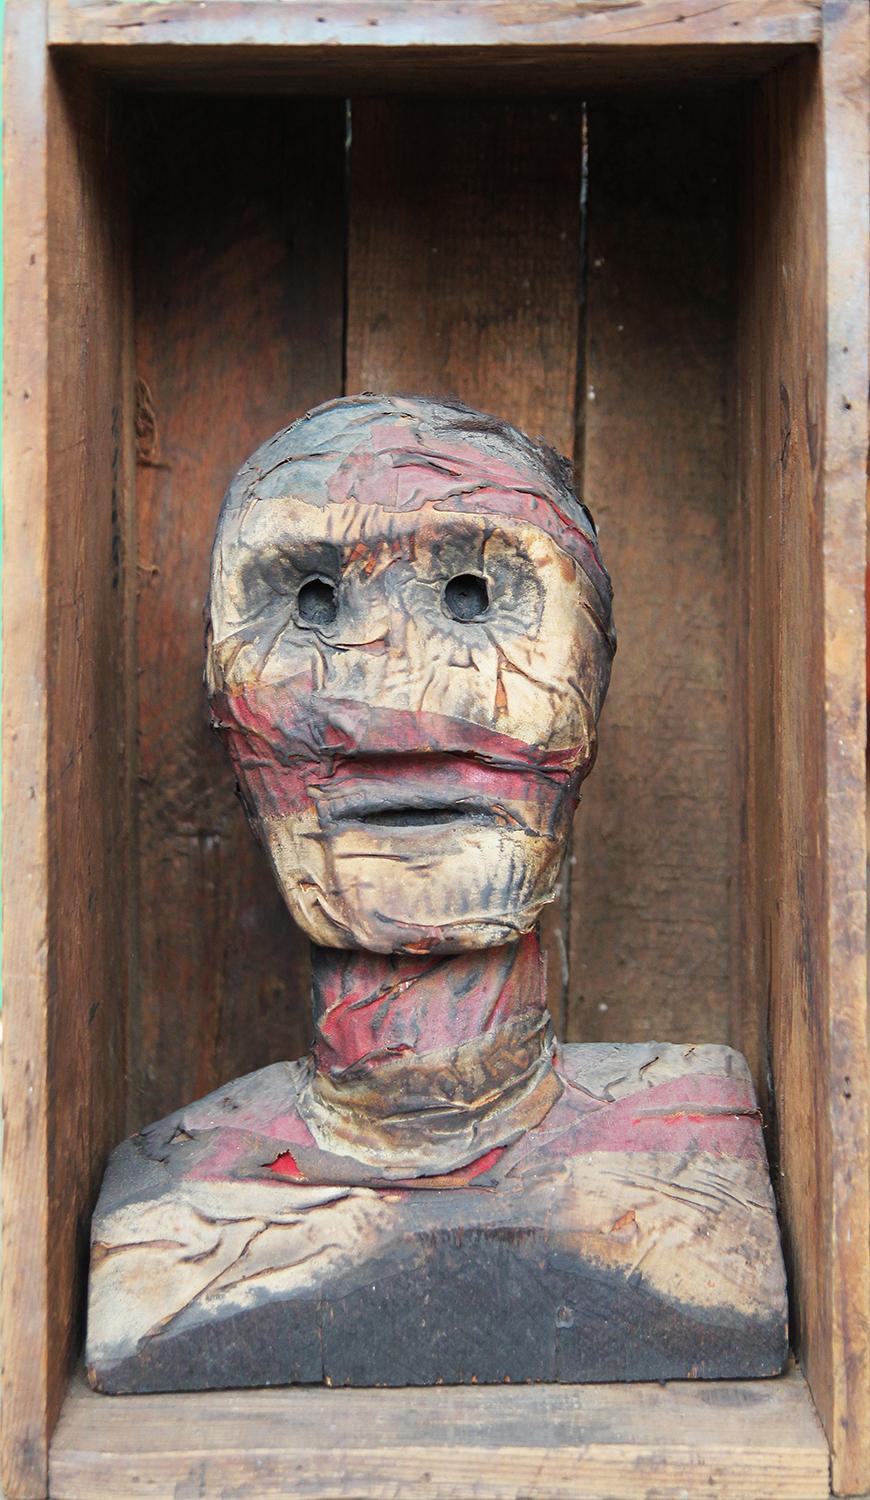 Modern Texas Mixed Media Sculpture of a Mummified Portrait Bust in a Box / Crate